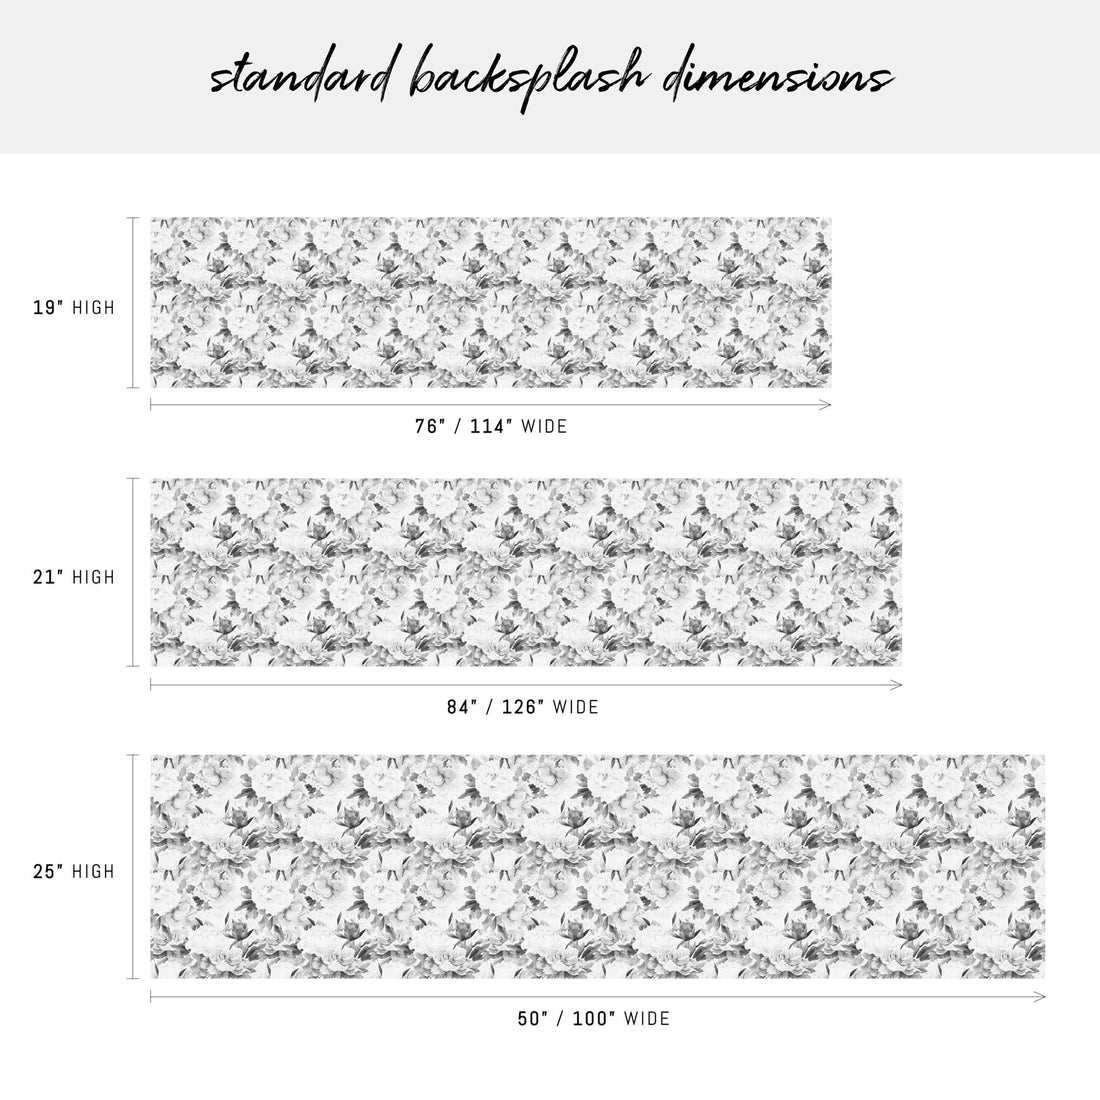 peel and stick backsplash dimensions in grey